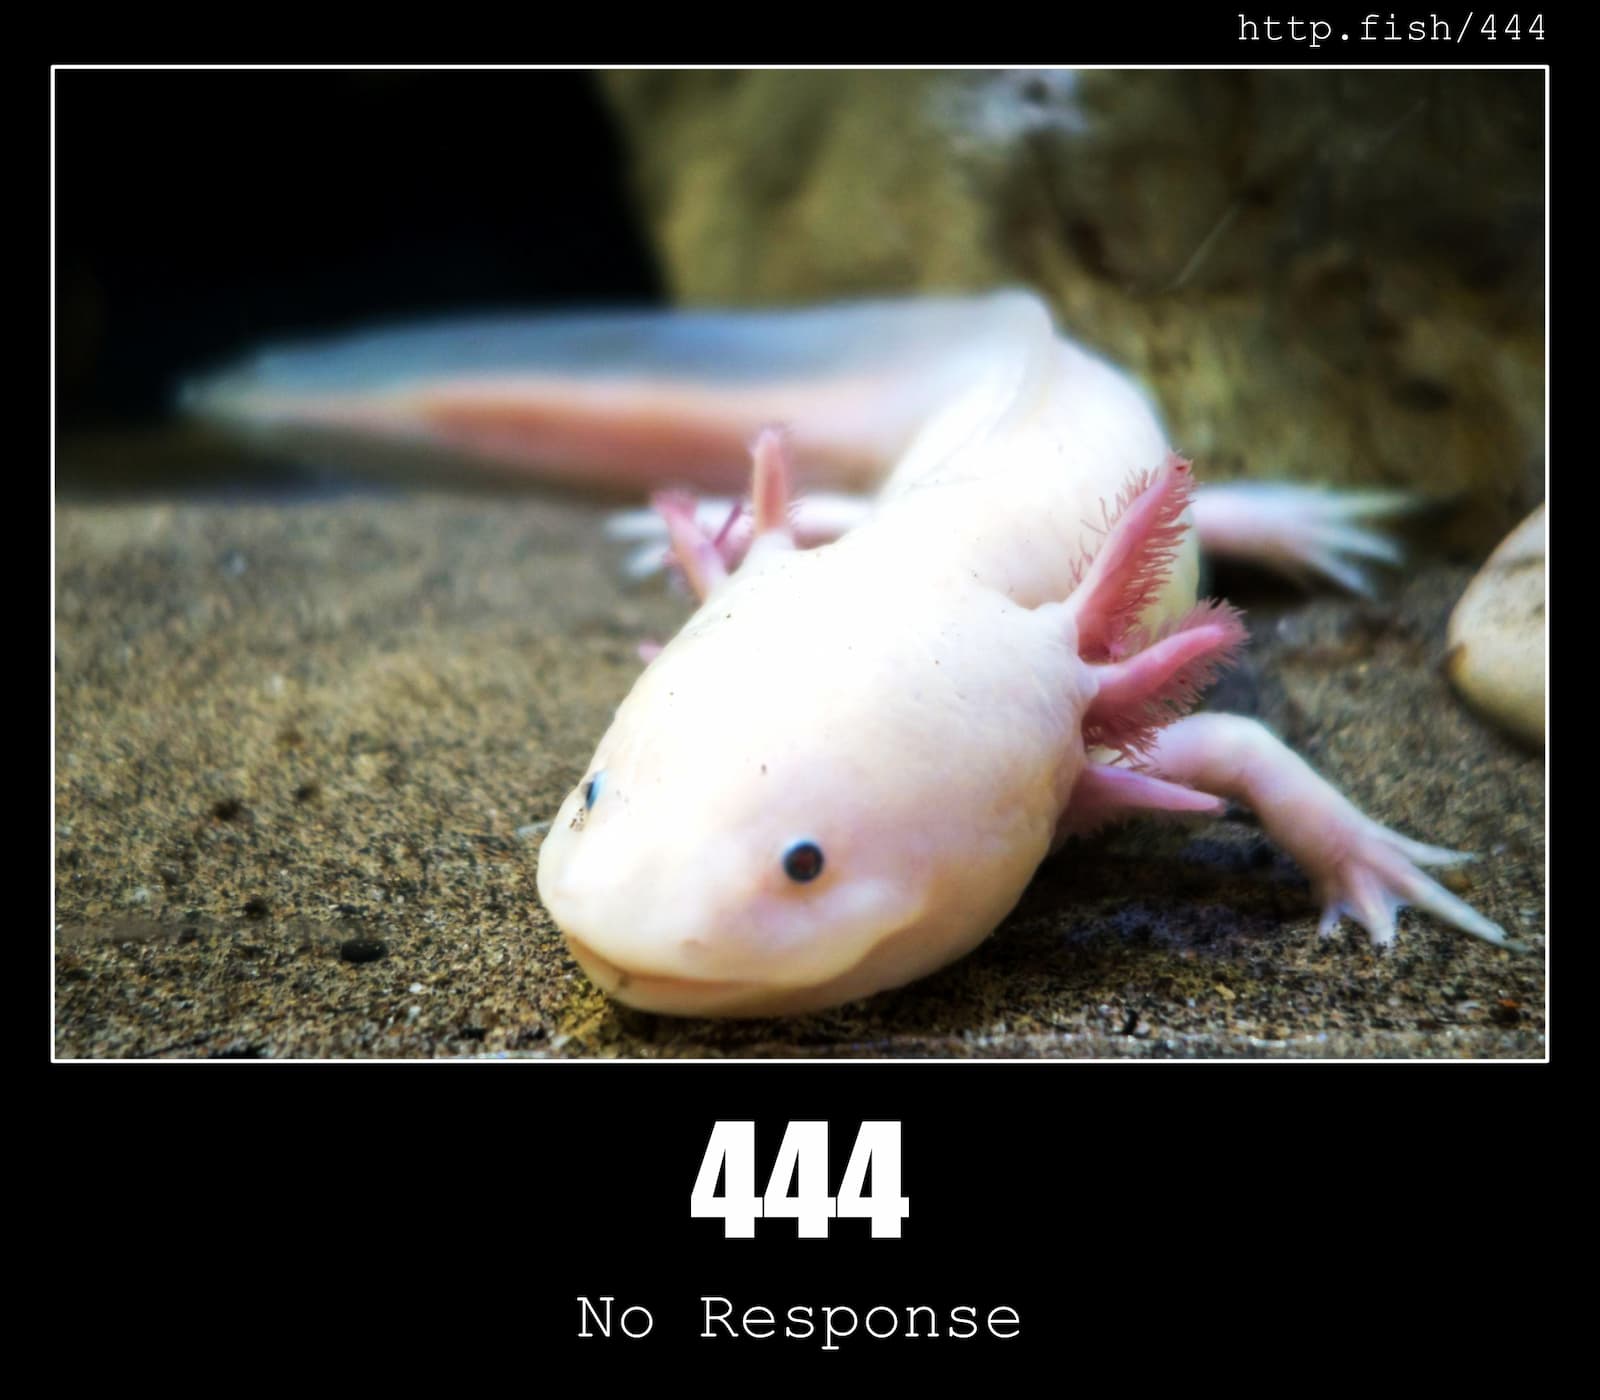 HTTP Status Code 444 No Response & Fish